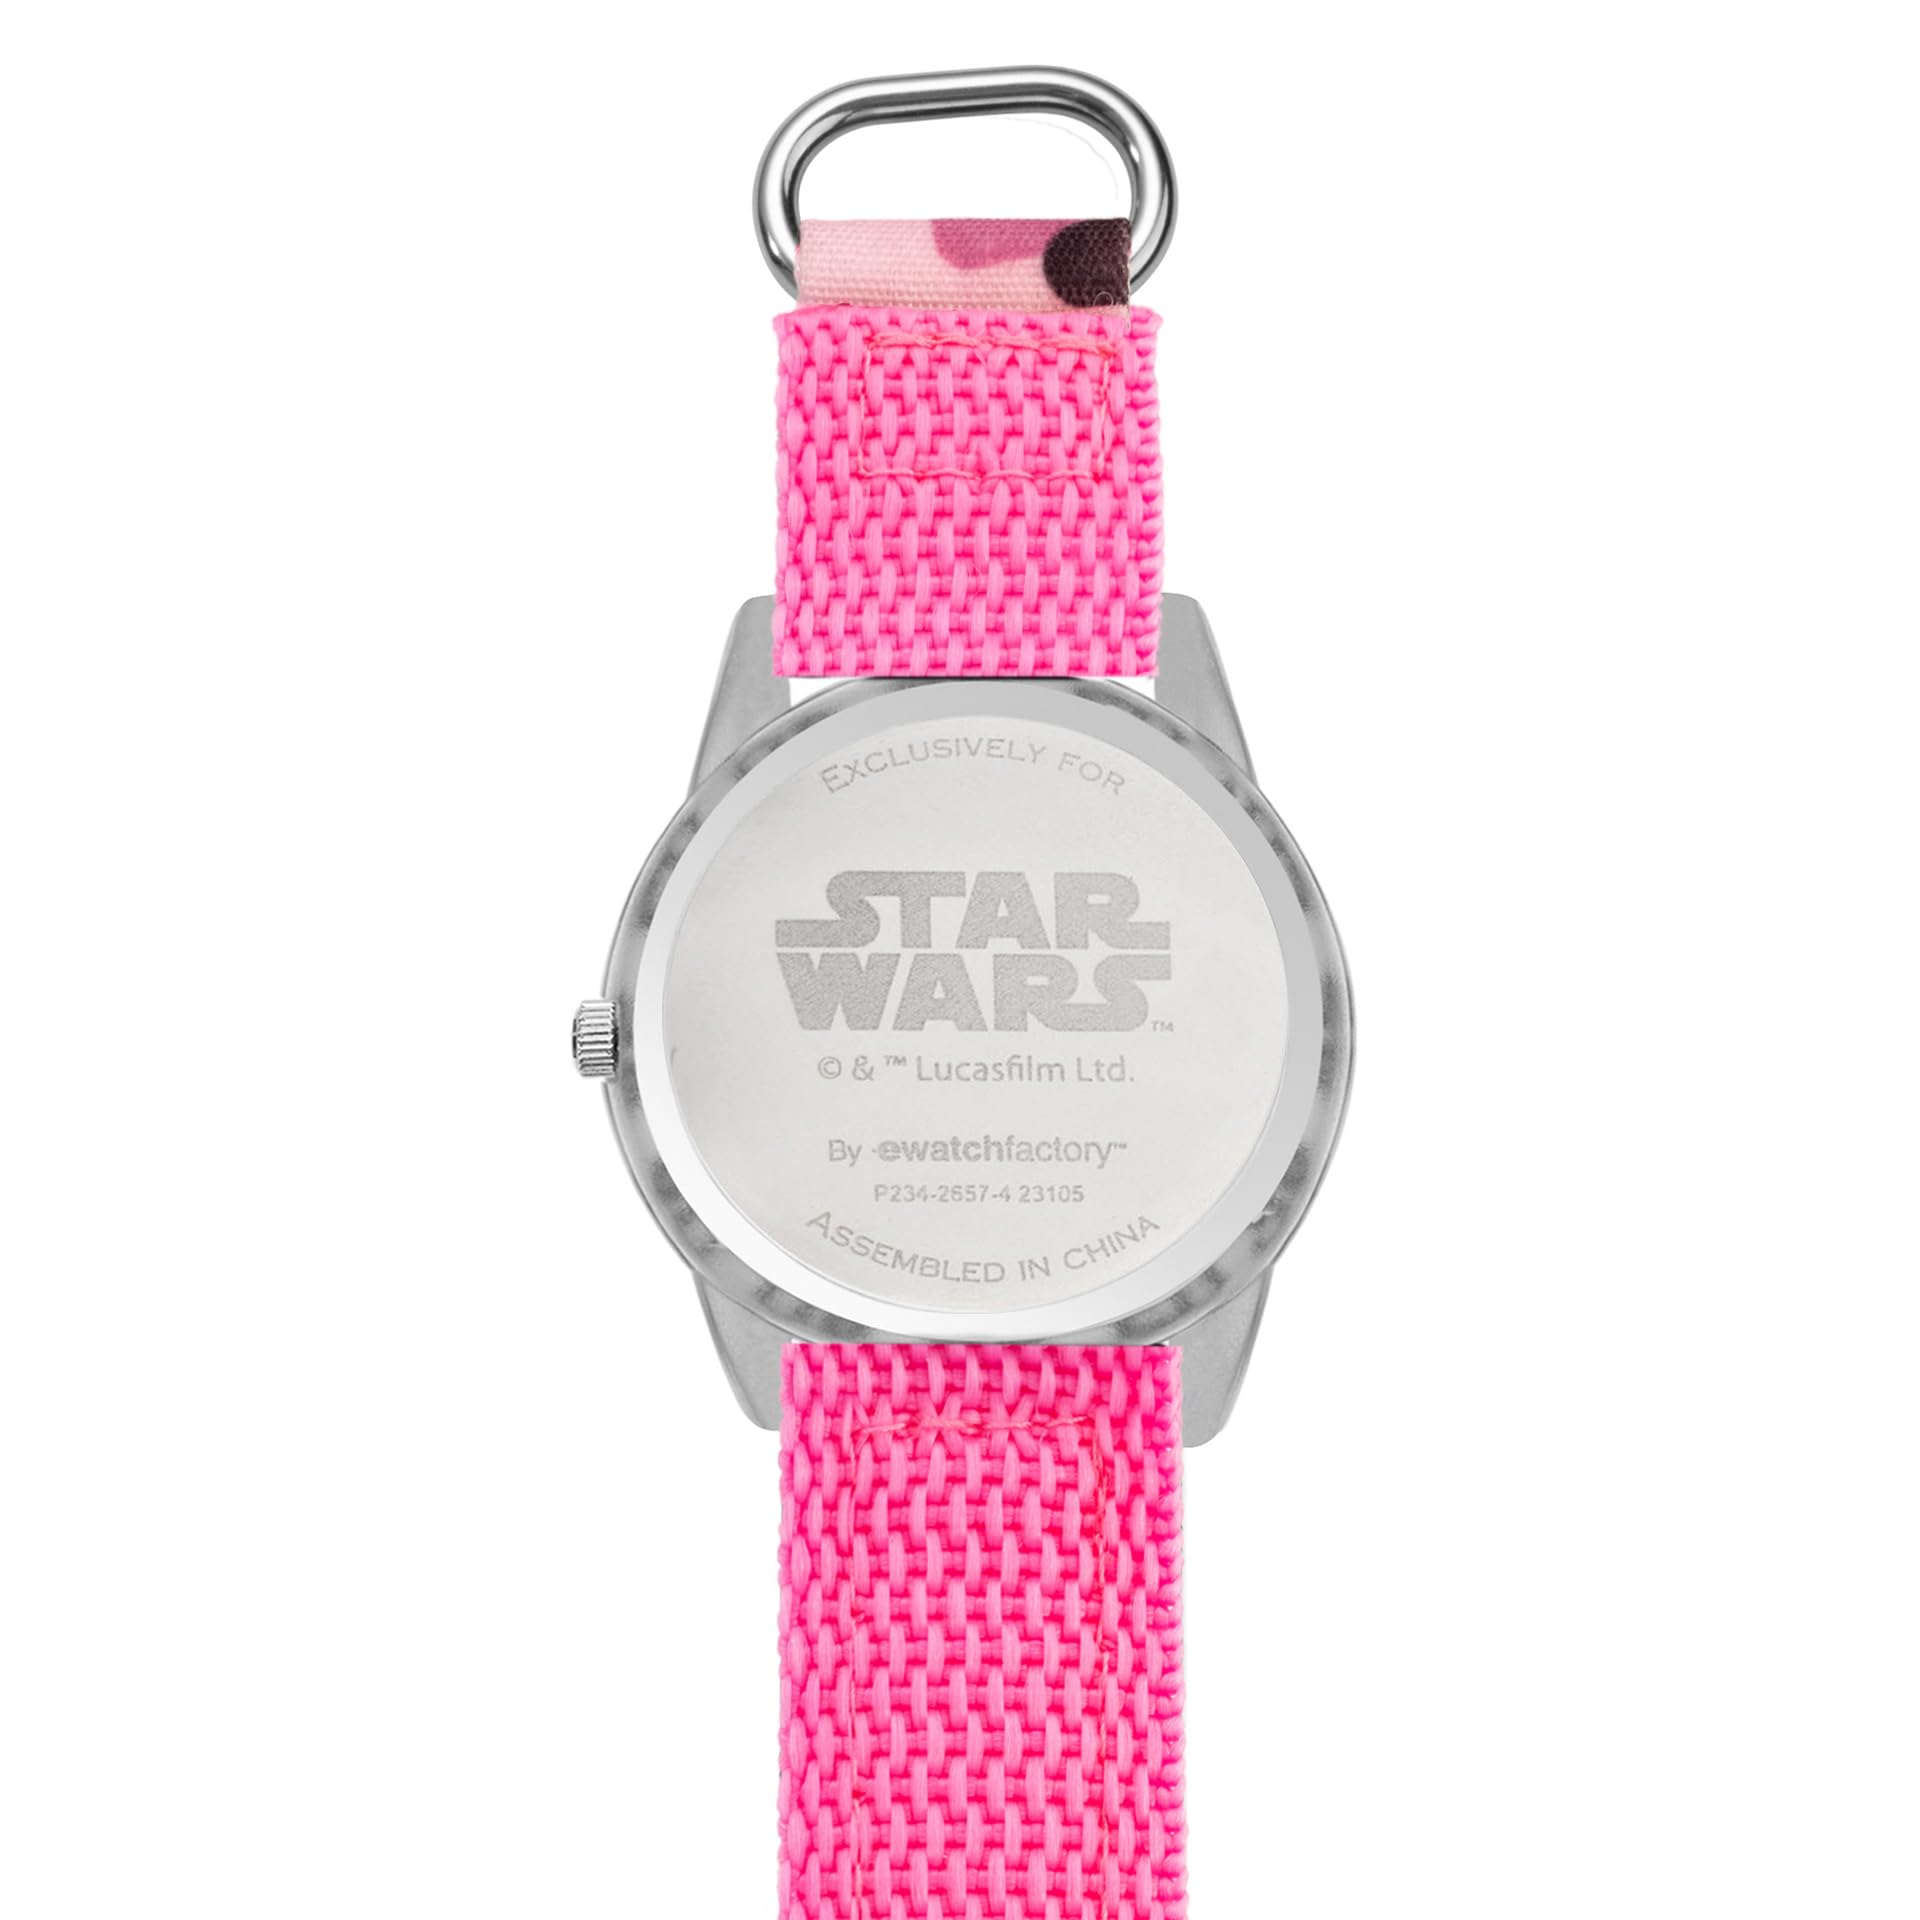 STAR WARS Kids' Plastic Time Teacher Watch, Analog Quartz Nylon Strap Watch